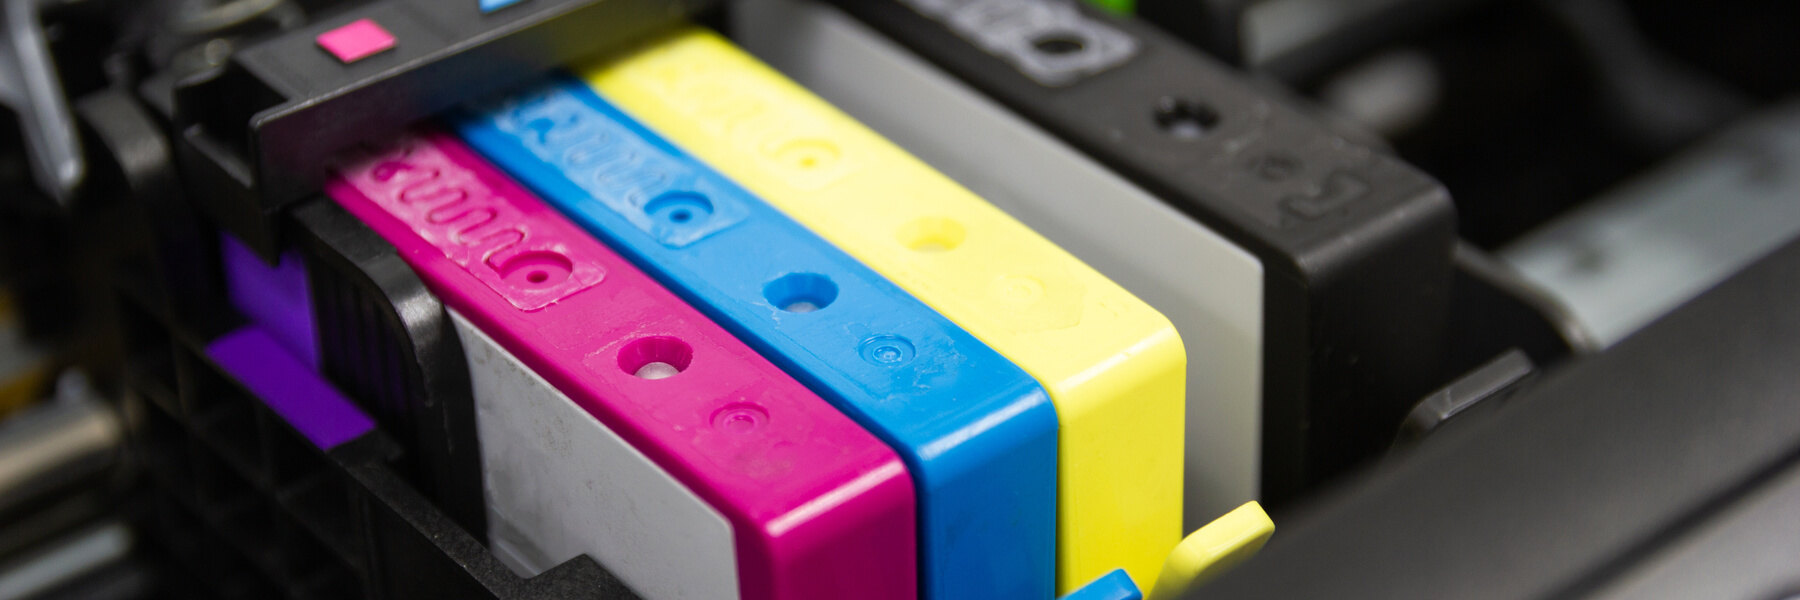 closeup of ink cartridges in an inkjet printer